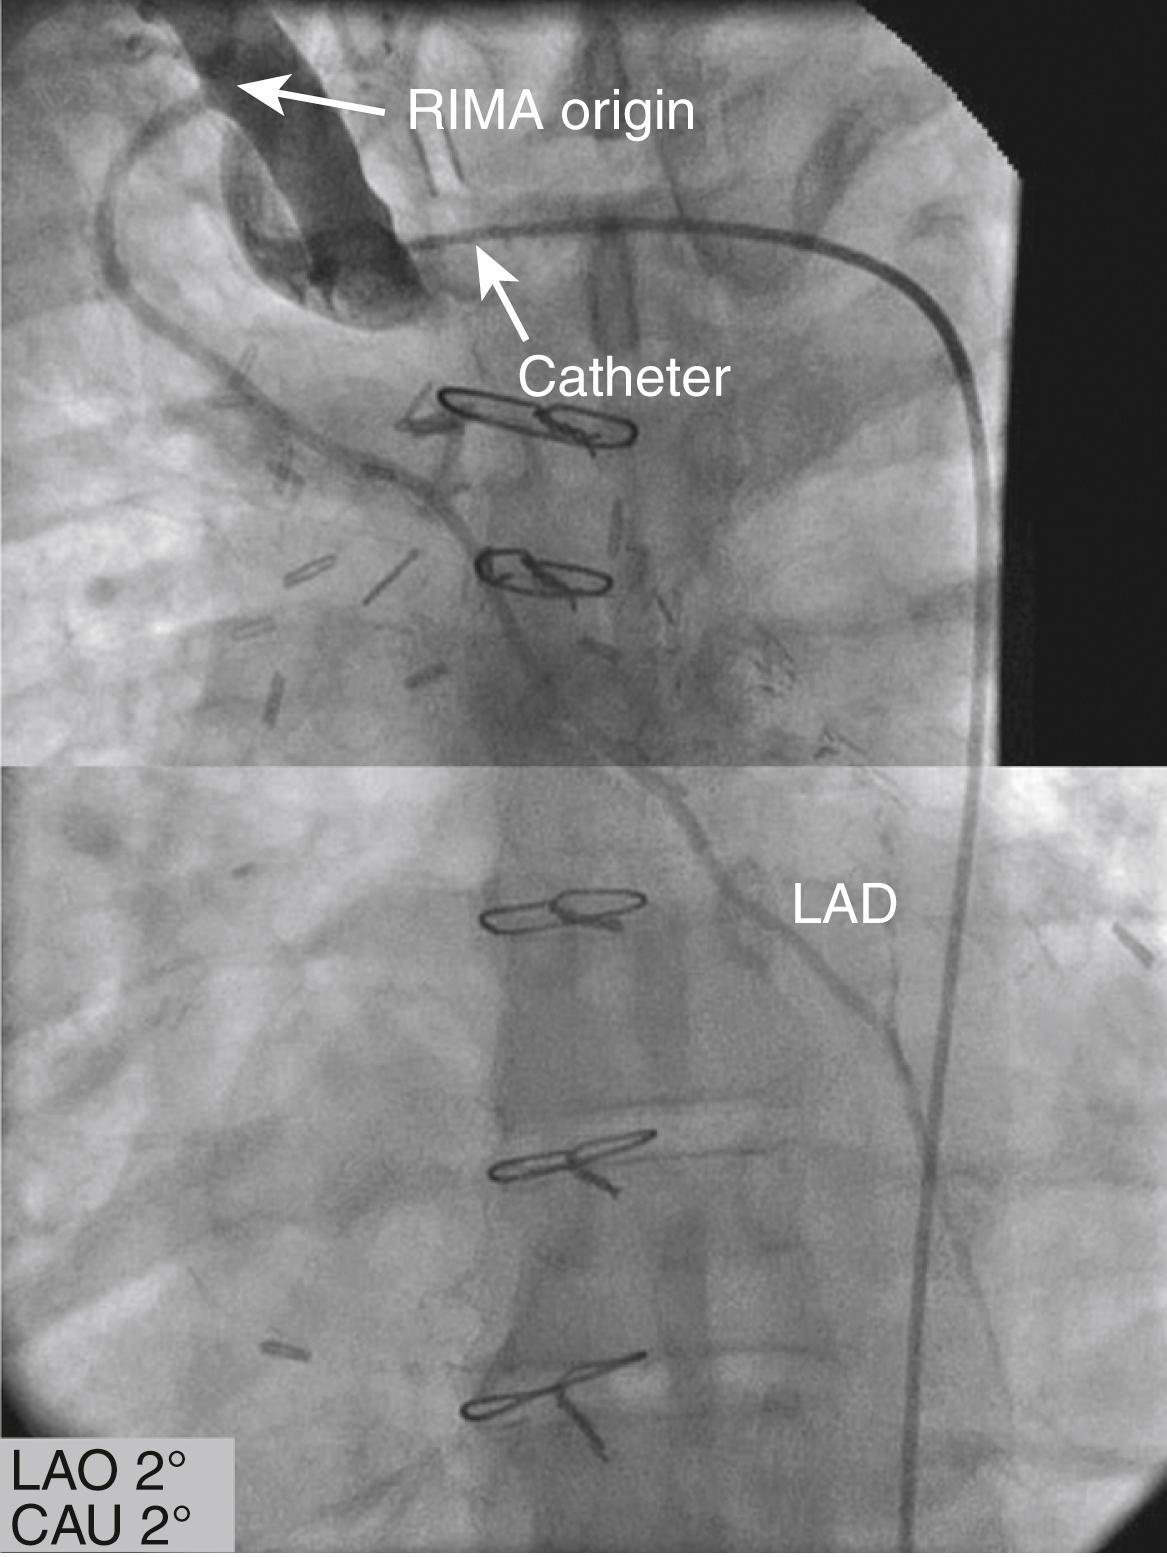 EFIGURE 21.4, Nonselective cannulation of the right internal mammary artery ( RIMA ) anastomosed to the left anterior descending artery ( LAD ). CAU, Caudal; LAO, left anterior oblique.